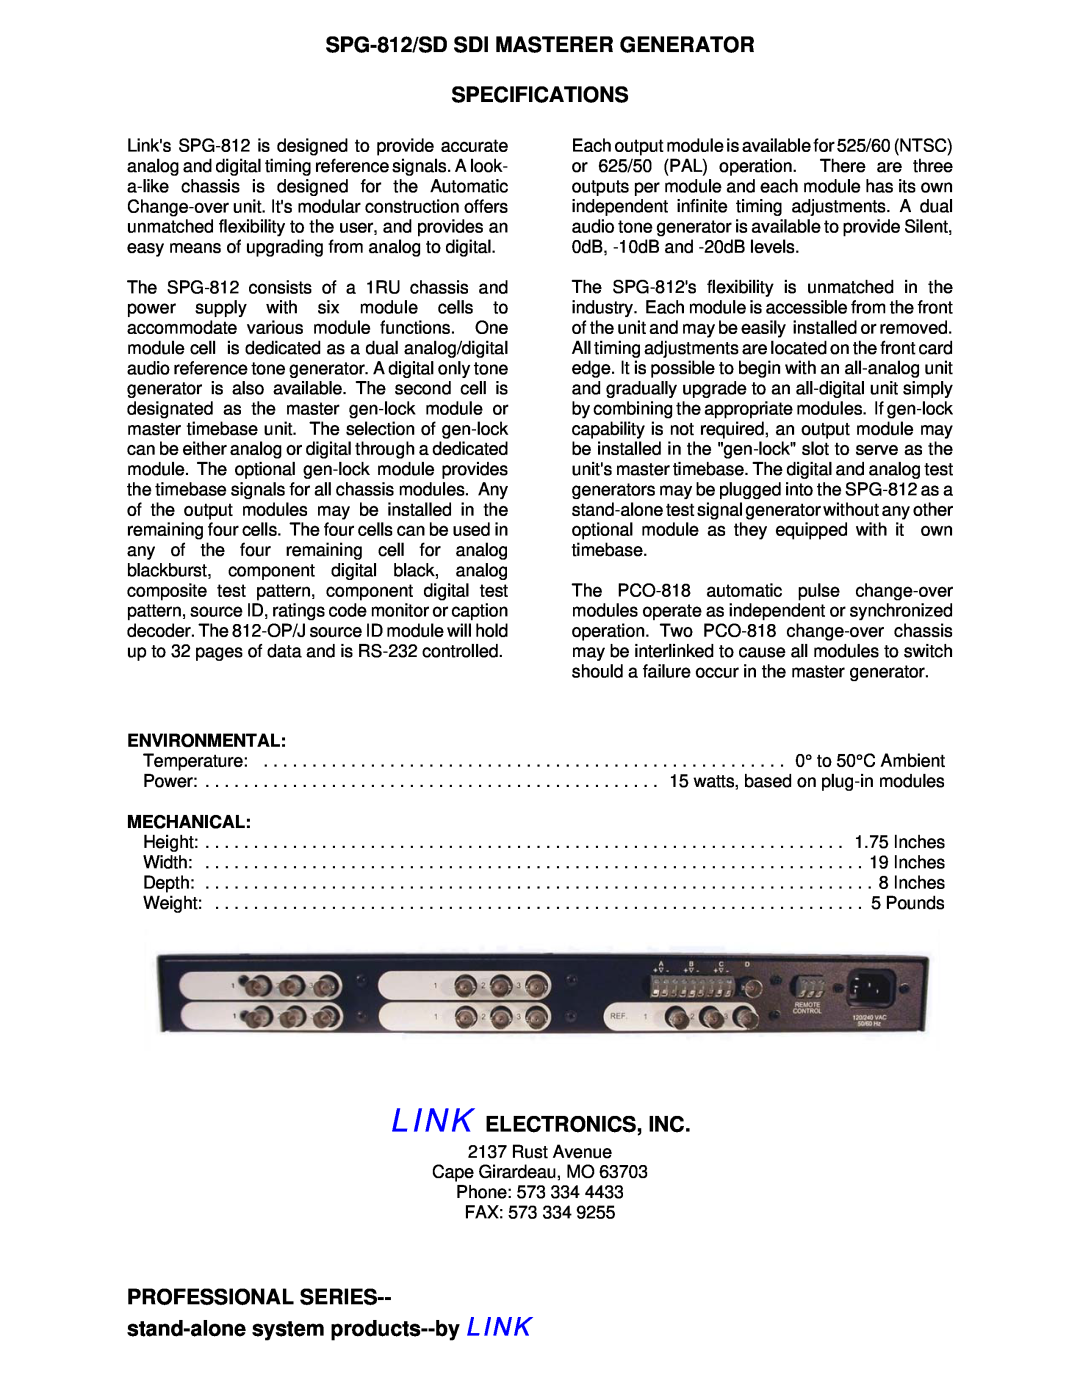 Link electronic SPG-812/SD SDI MASTERER GENERATOR SPECIFICATIONS, Link Electronics, Inc, Environmental, Mechanical 